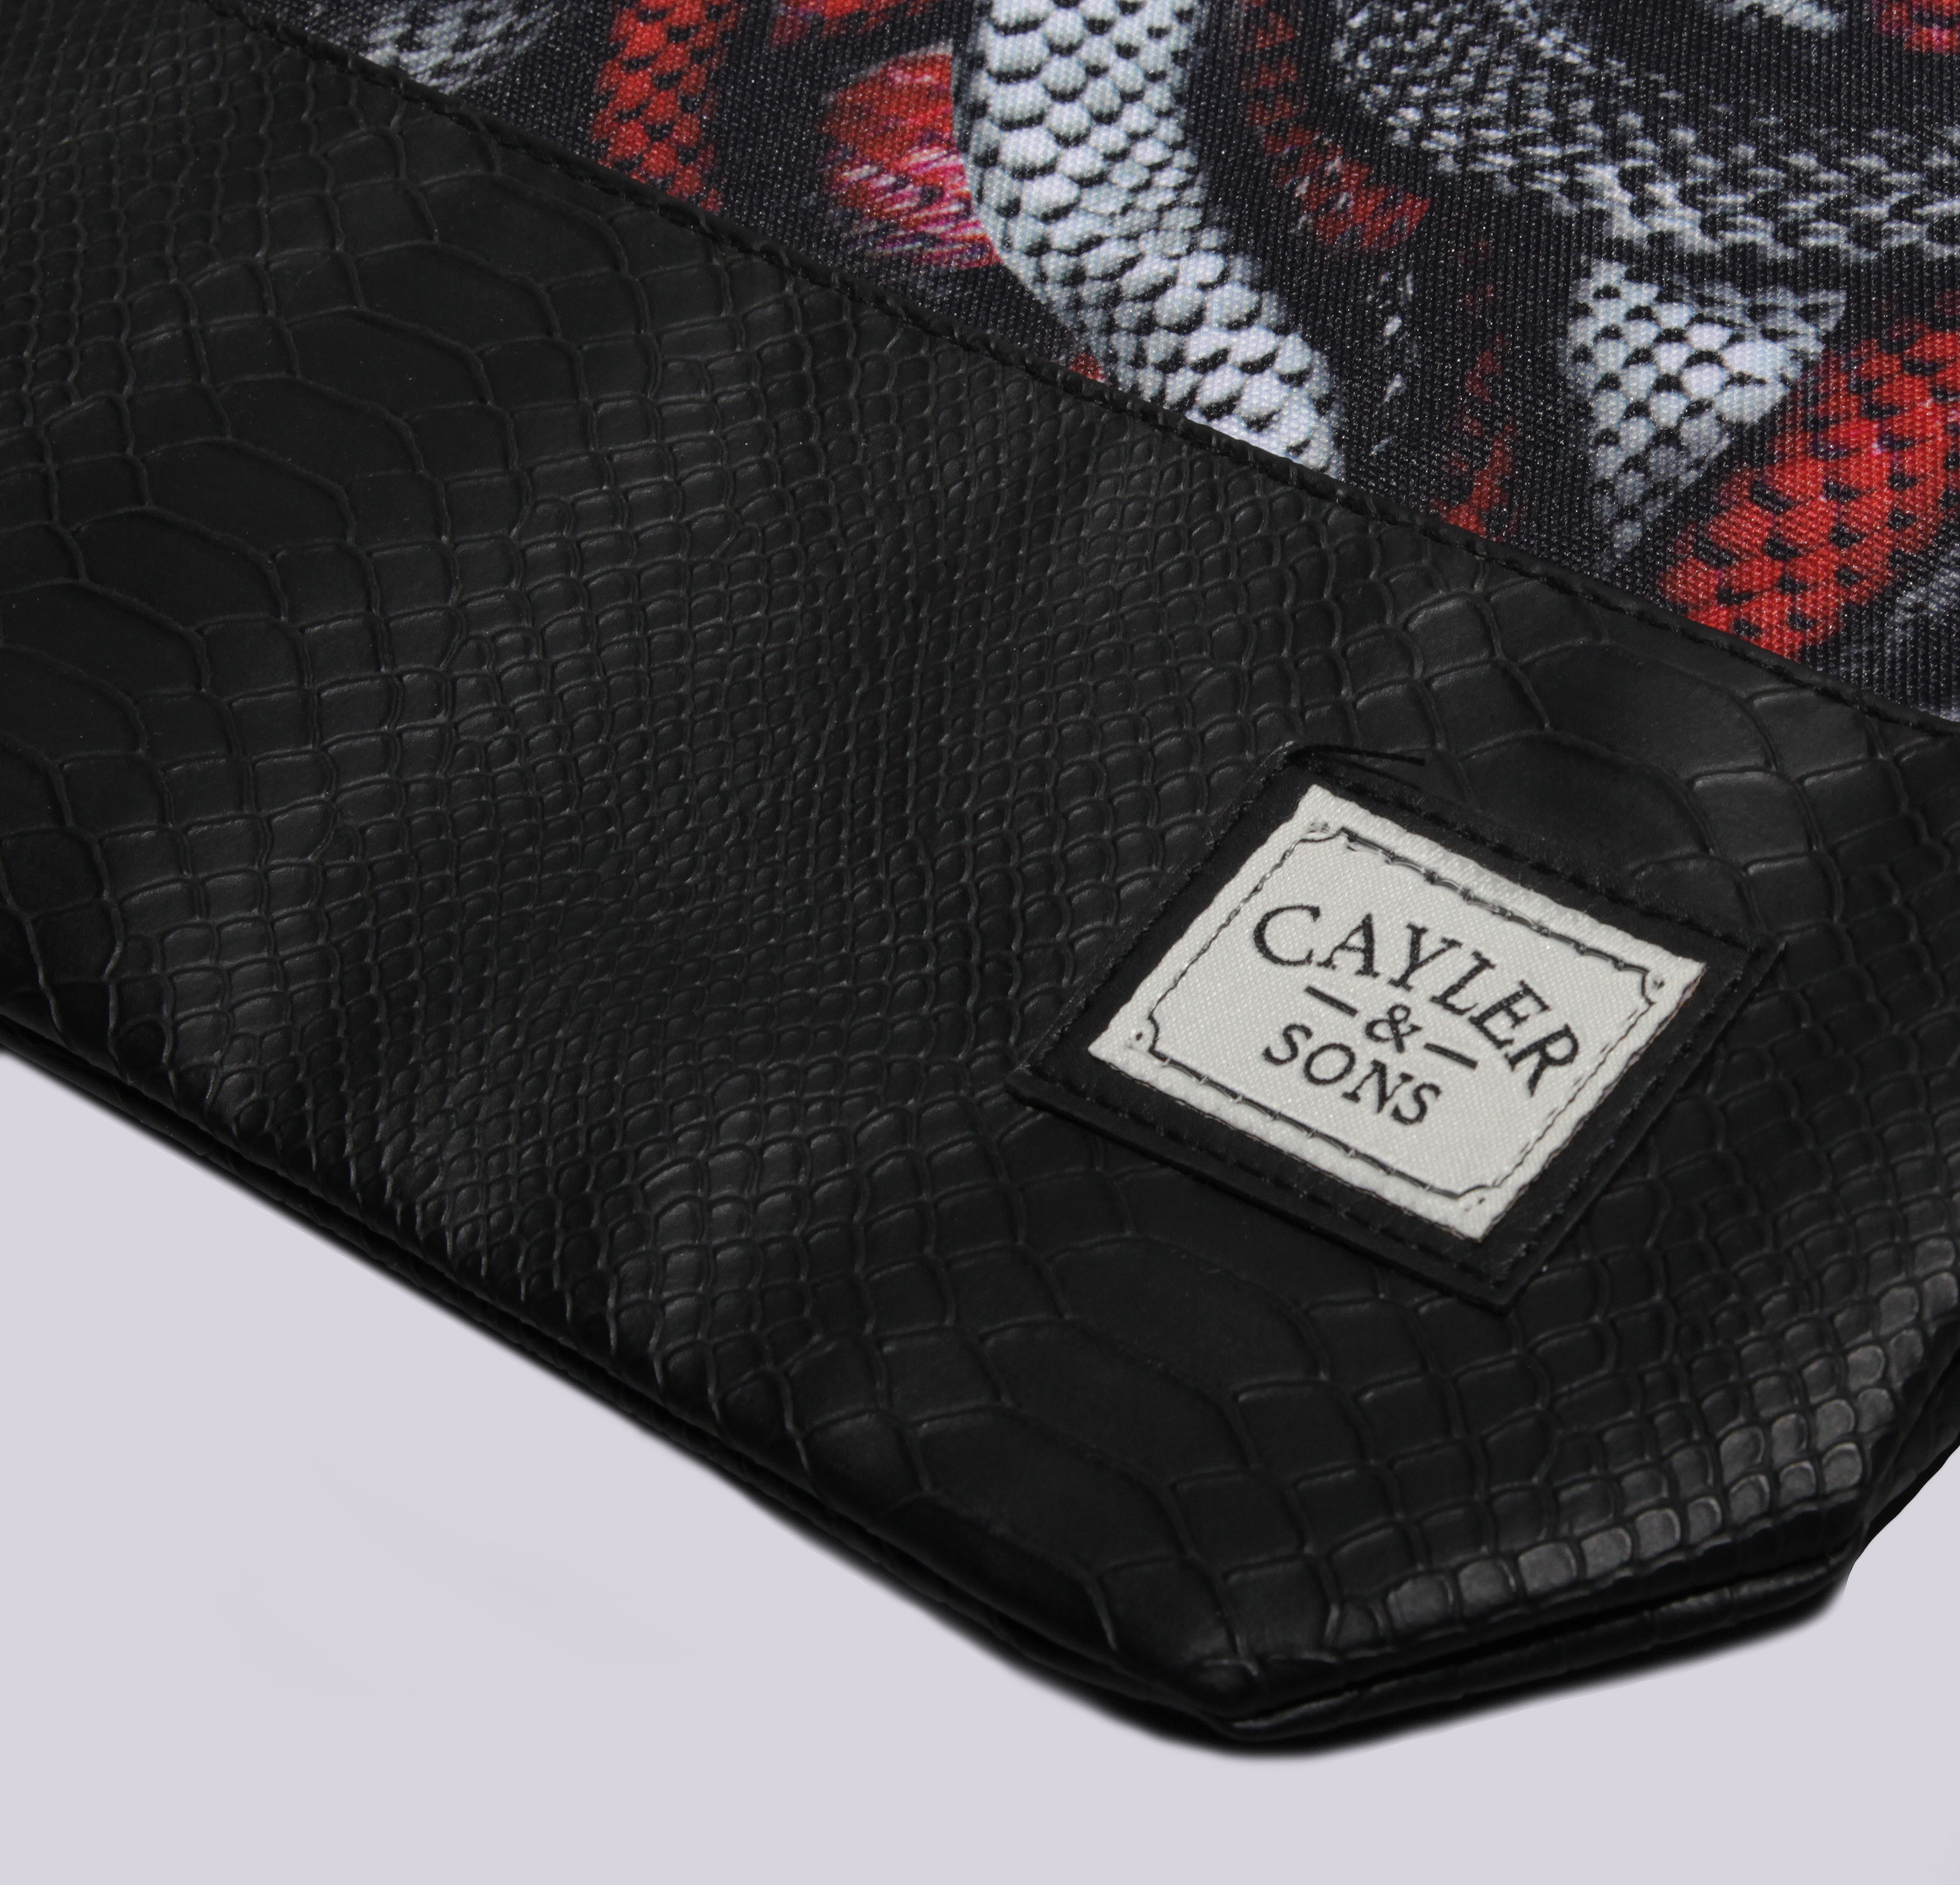  черный мешок Cayler & sons CAY-AW14-GB-03 Milano-red-blk-snake - цена, описание, фото 3